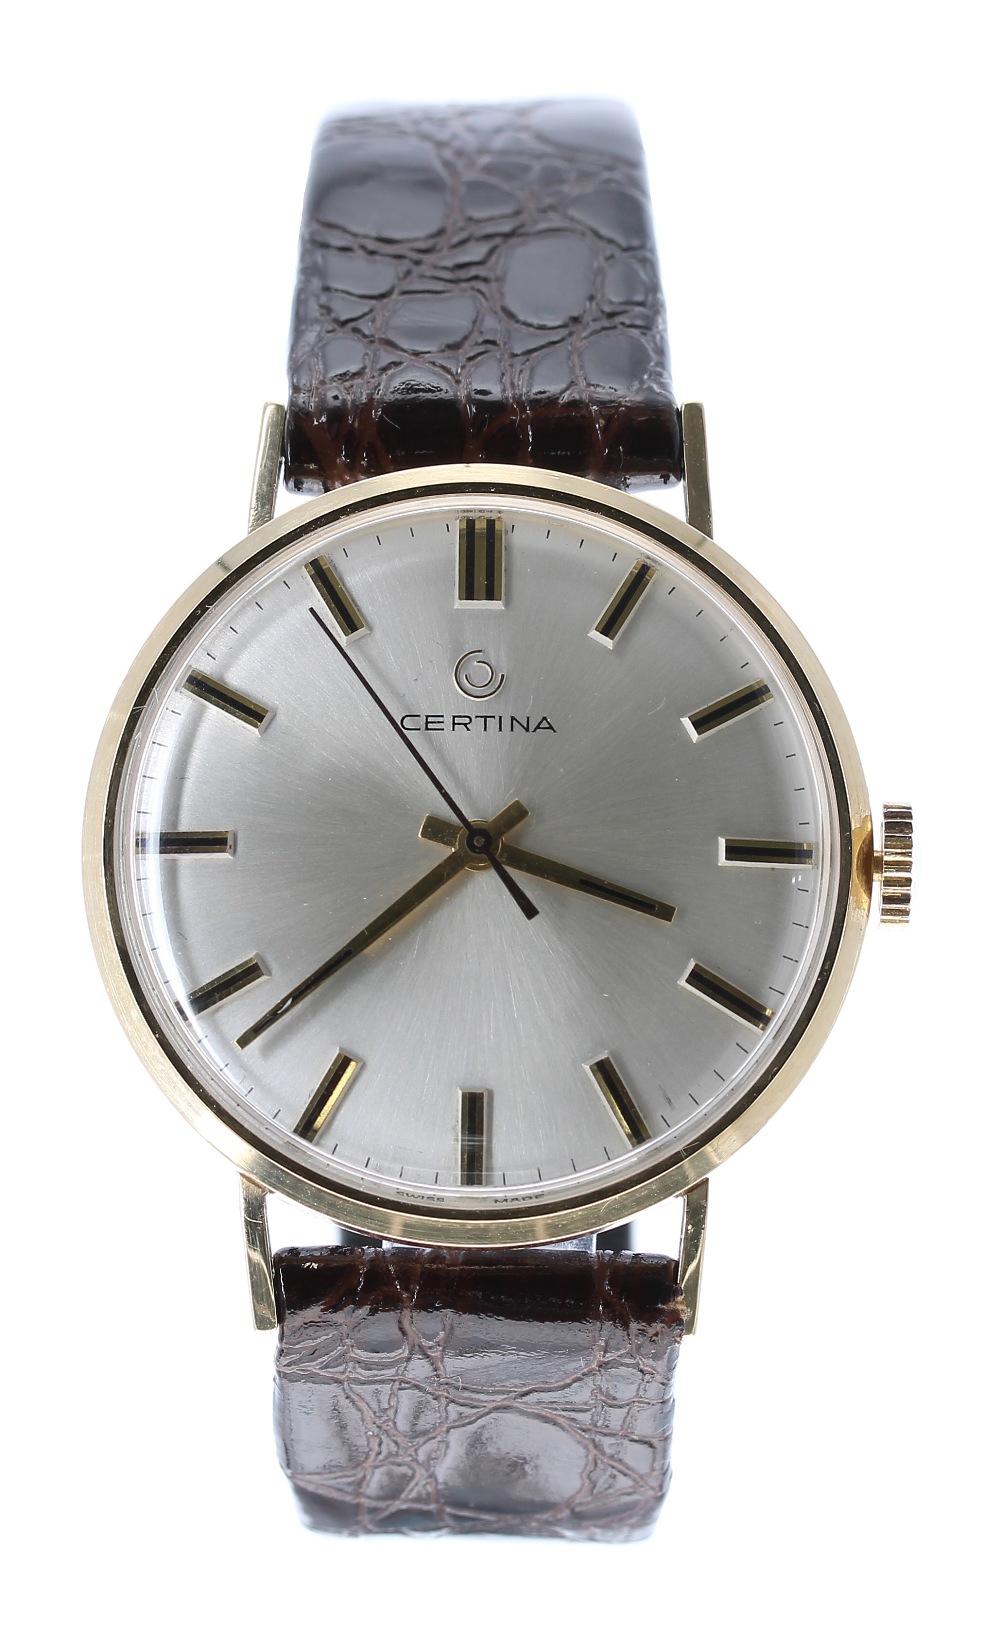 Certina 9ct gentleman's wristwatch, London 1966, case no. 23518, circular silvered dial with baton